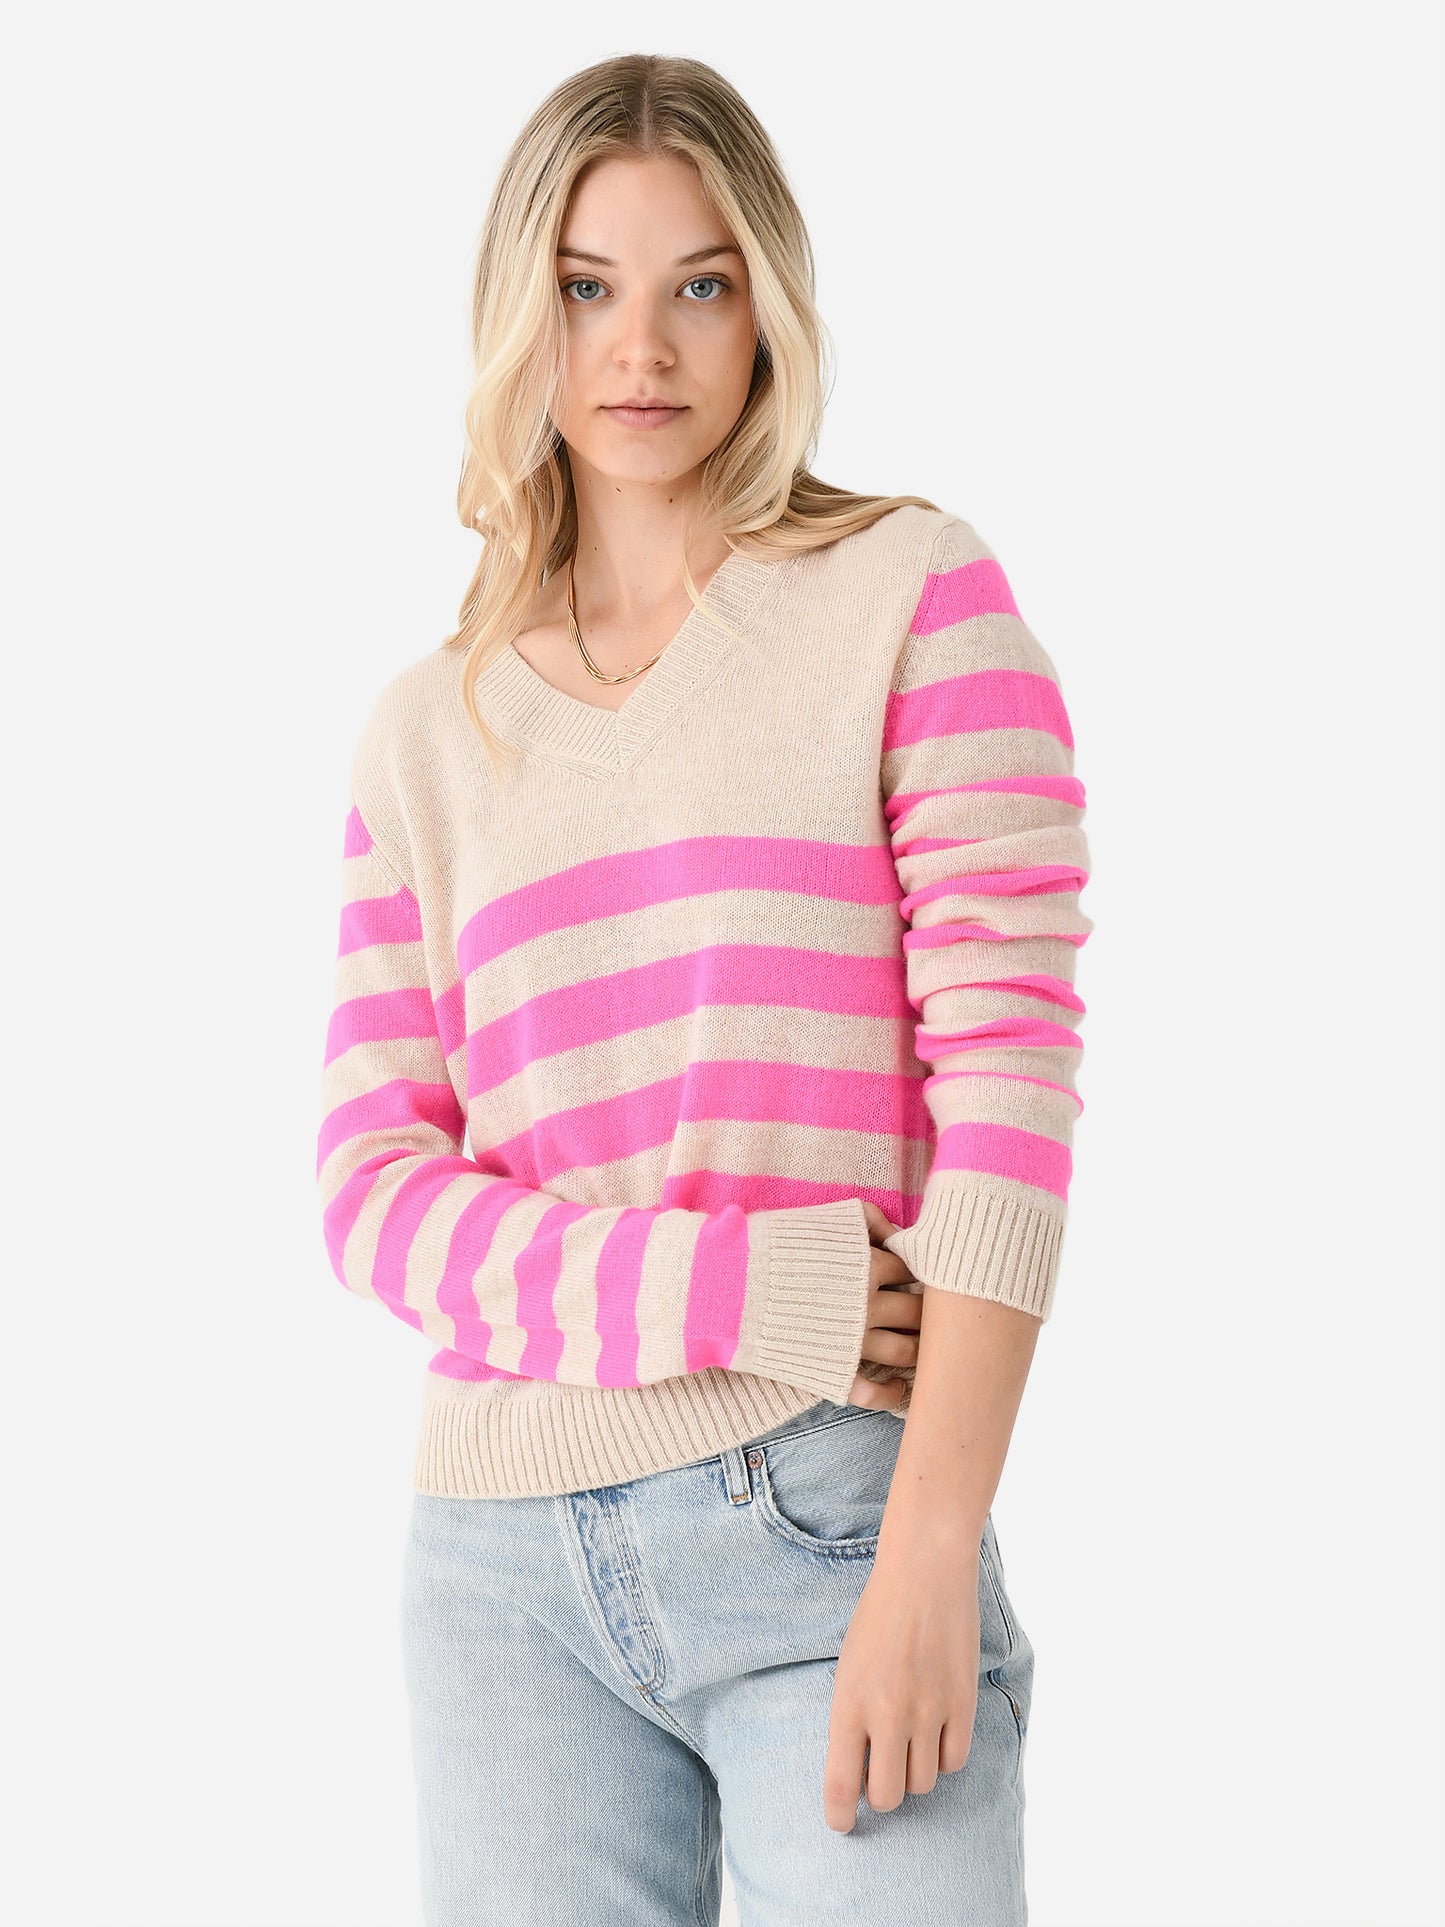 Jumper 1234 Women's Invert Stripe Vee Sweater